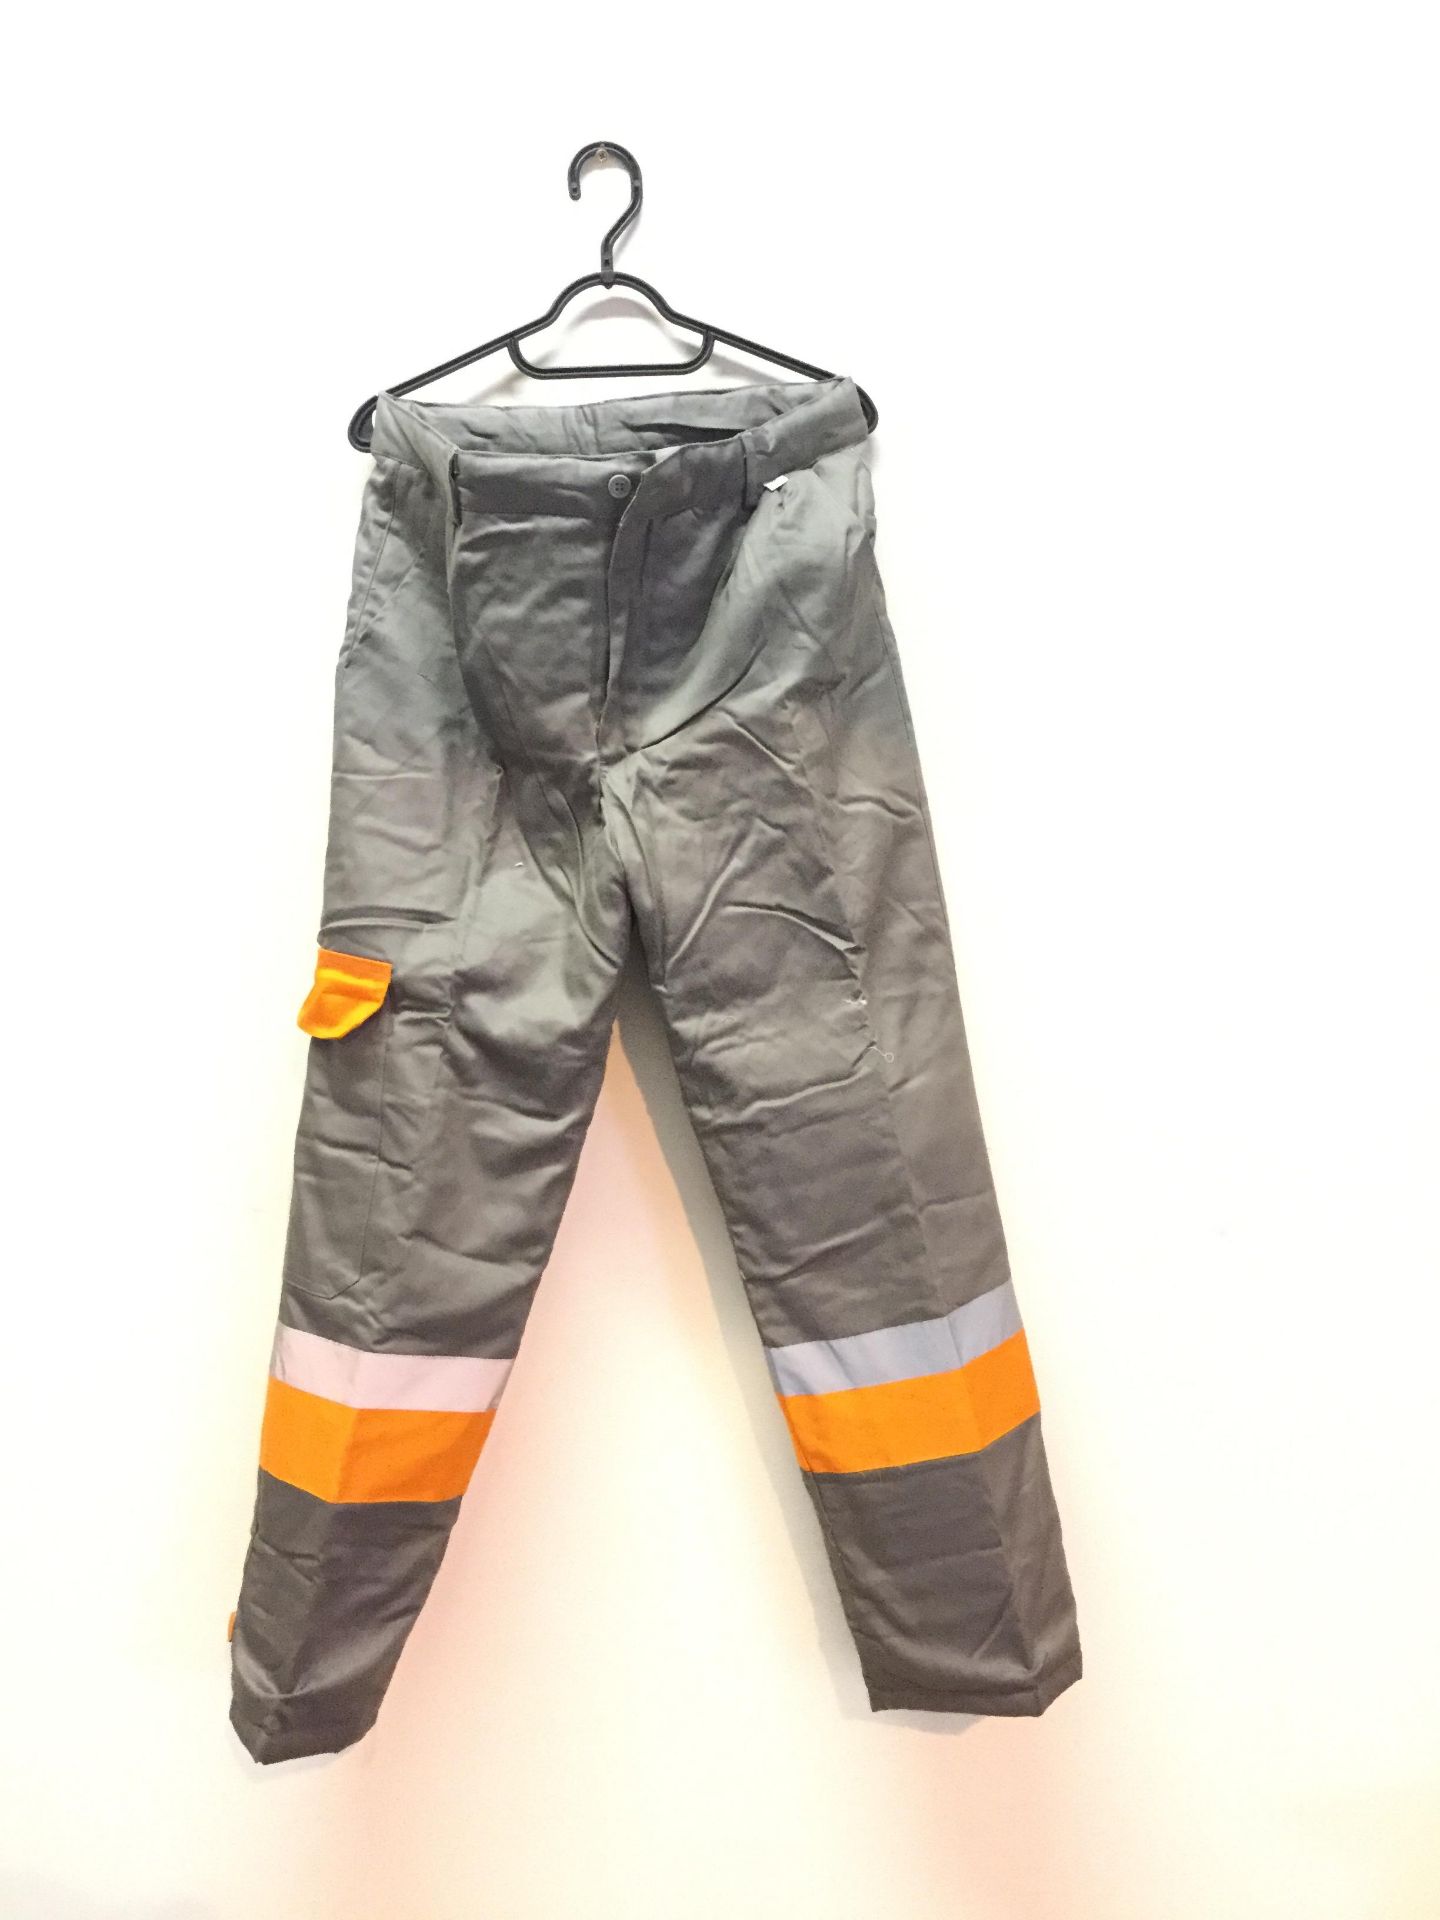 Flame Retardant Winter Trousers - Size 54